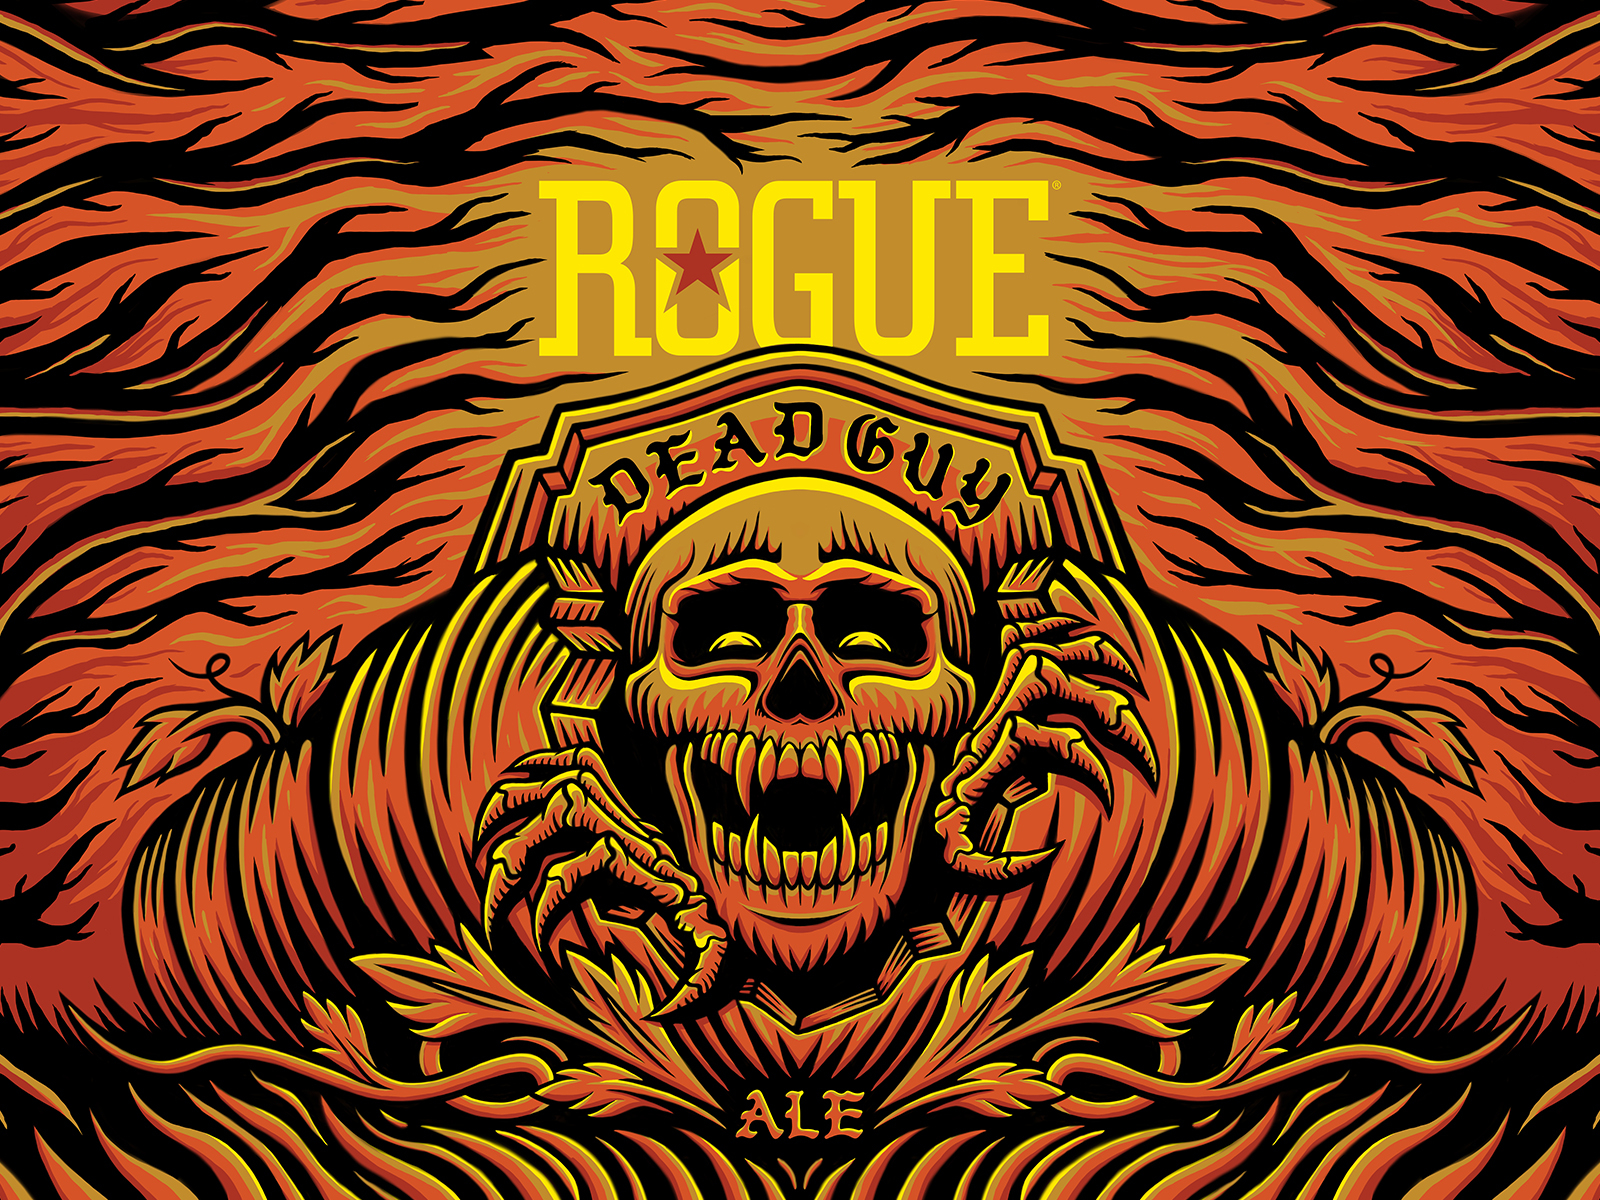 Rogue Dead Guy Ale bradford design co beer branding ale craft beer beer art bradford dead guy skull skate illustration rogue dead guy rogue